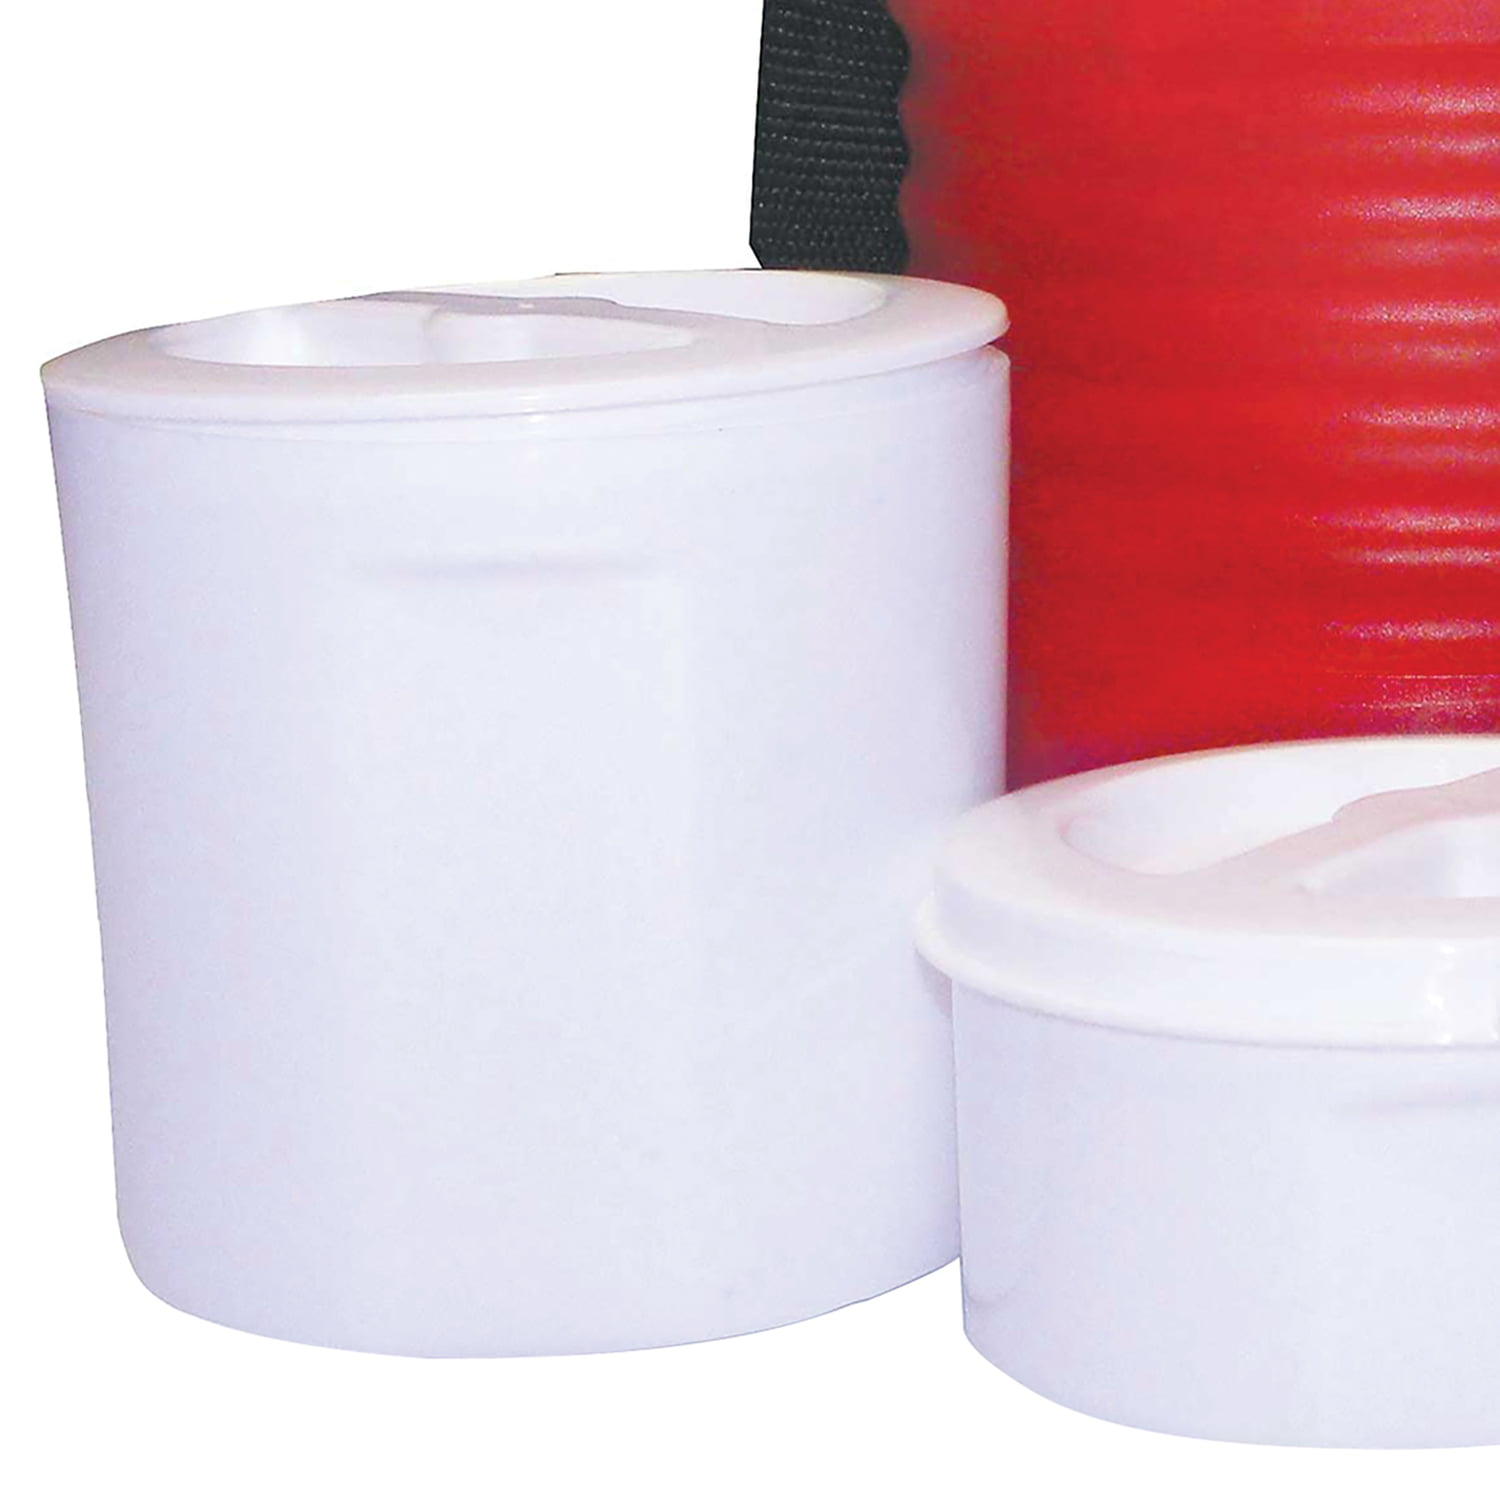 Brentwood Raz12 Vacuum Insulated Food Jar (40-Ounce)